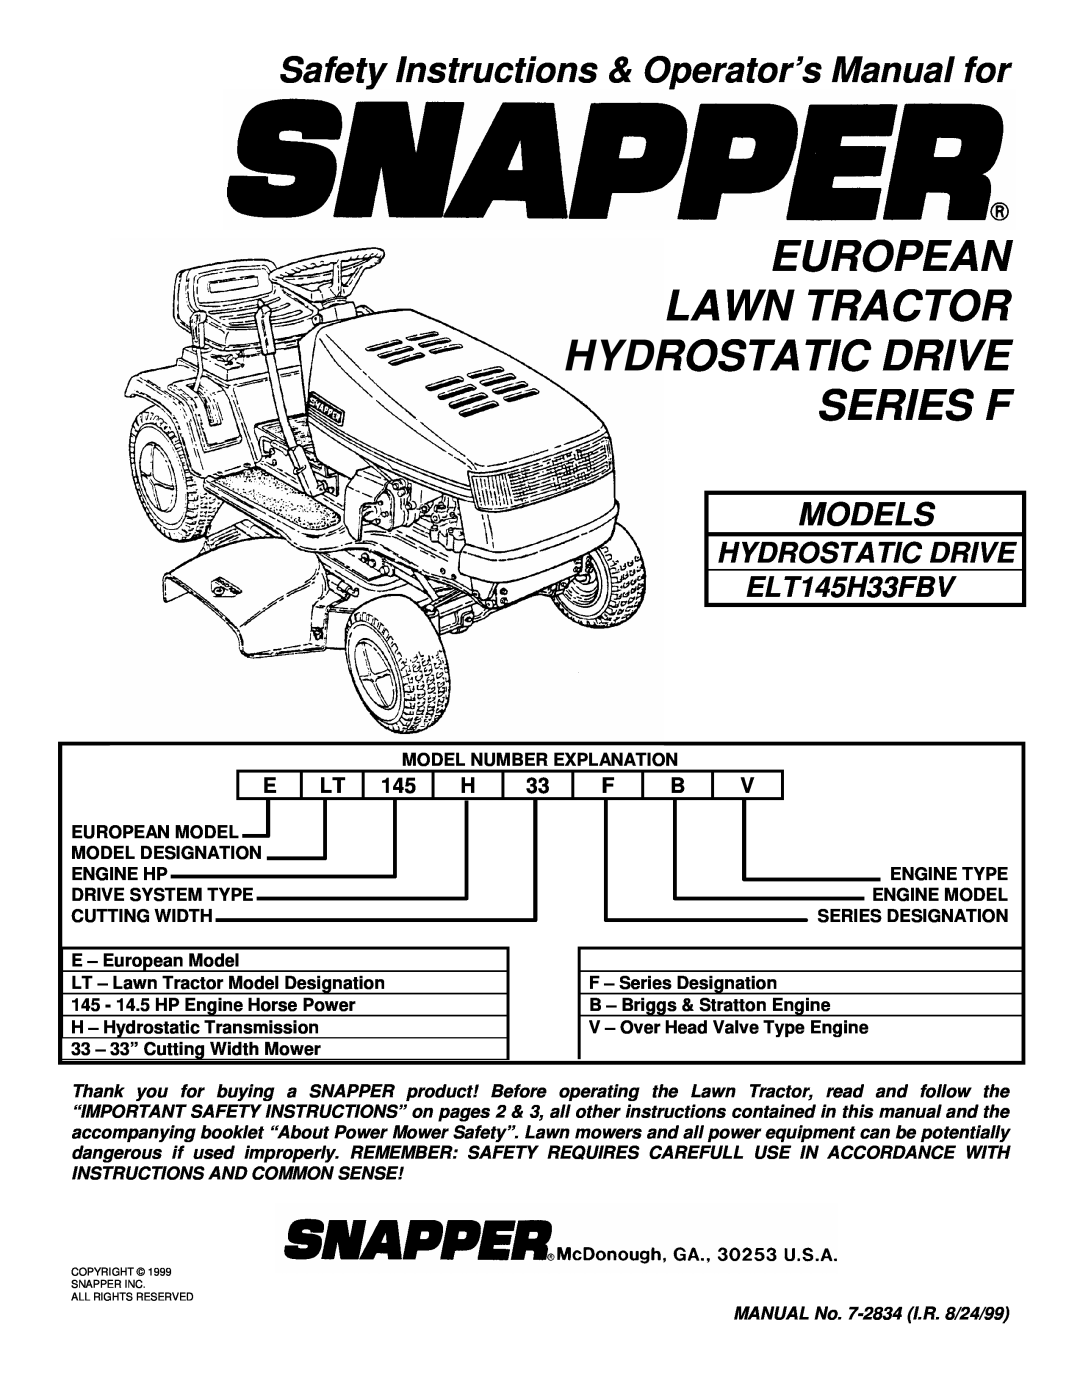 Snapper ELT145H33FBV important safety instructions Safety Instructions & Operator’s Manual for, Models 